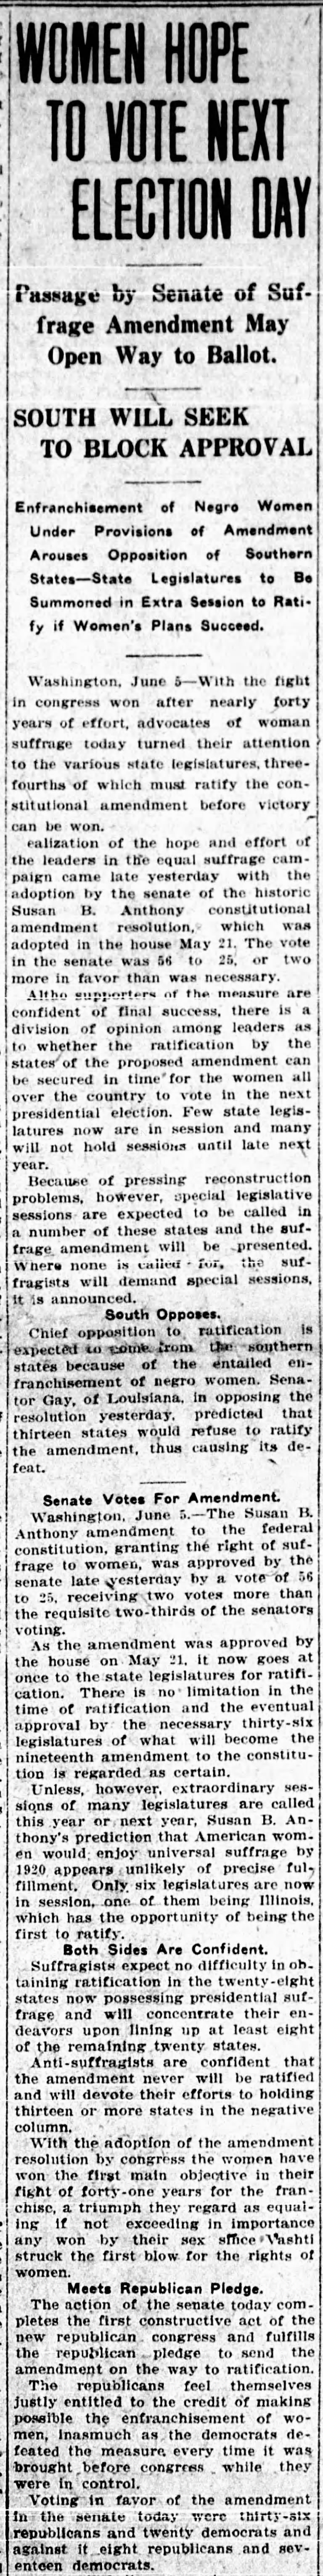 U.S. Senate passes the 19th Amendment; Amendment will now go to states for ratification, 1919